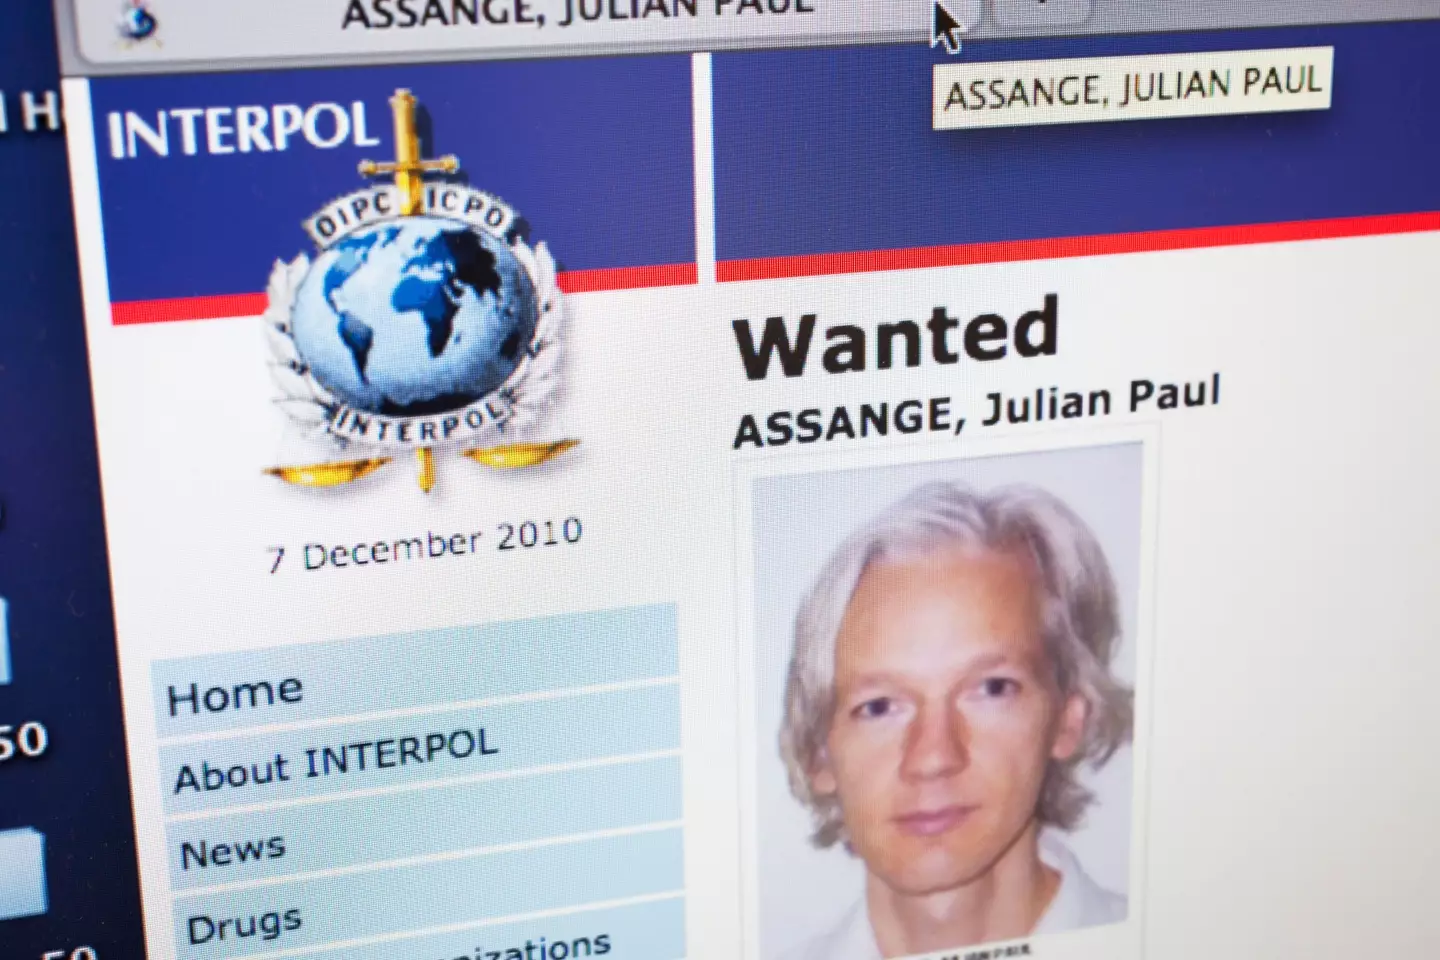 Website for Interpol showed Julian Assange's status as Wanted.